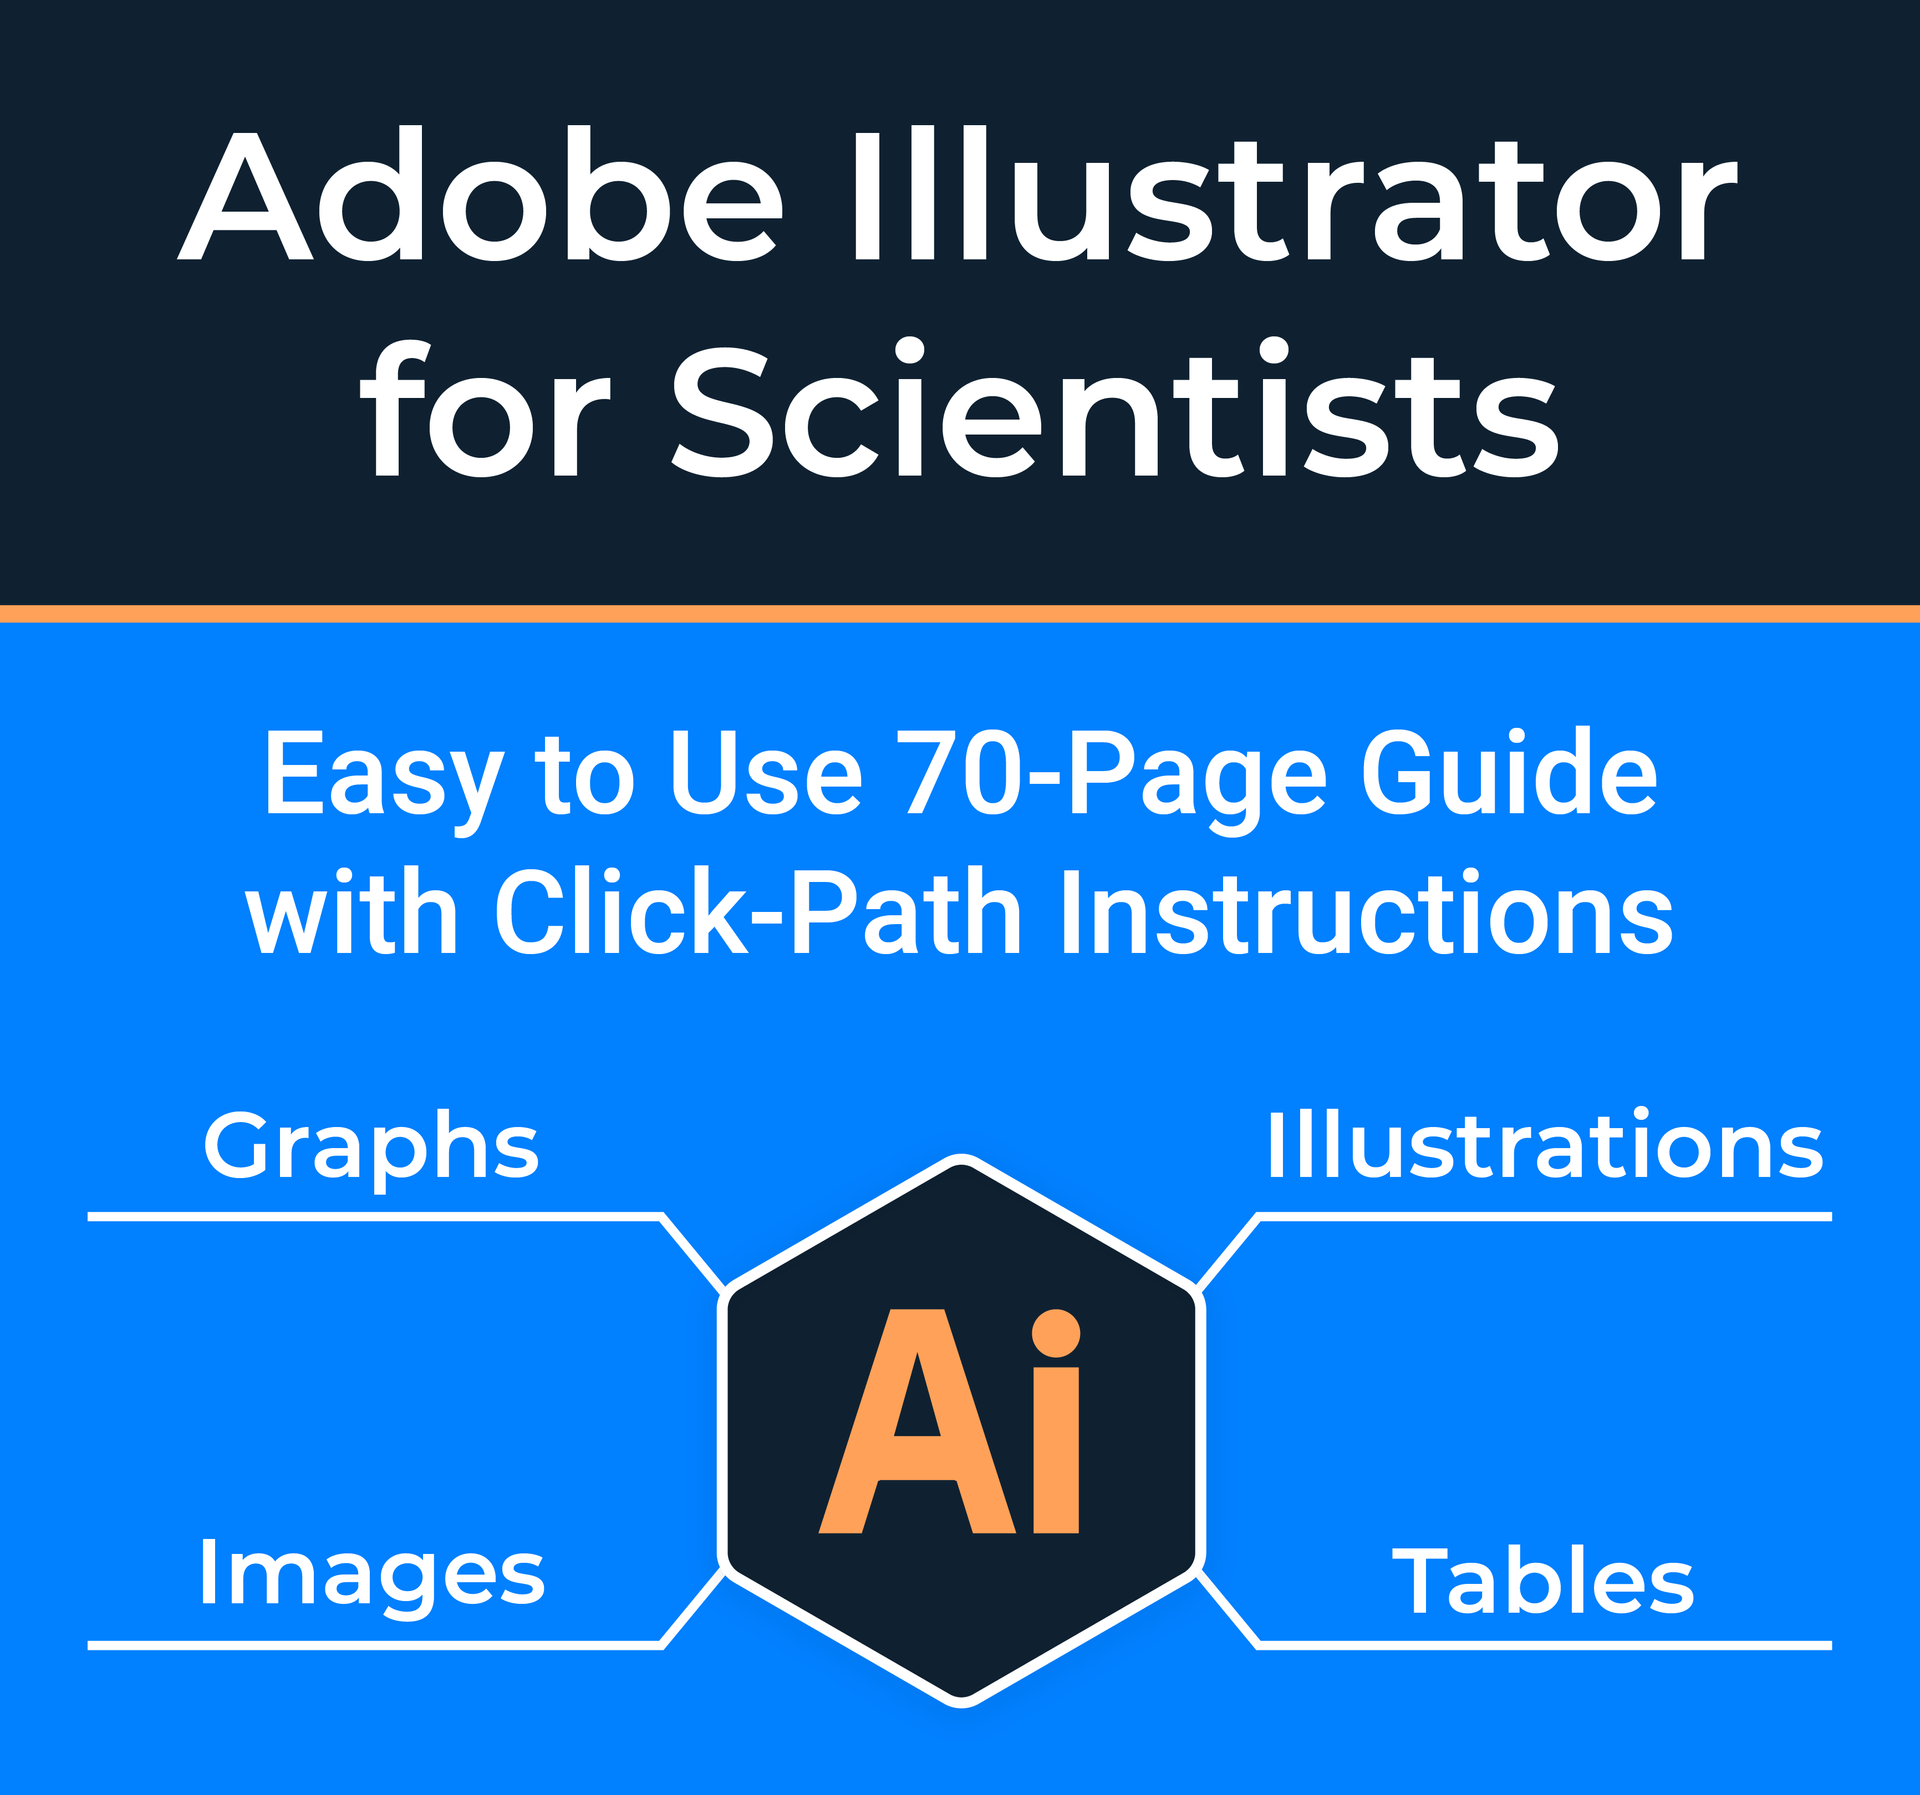 Adobe Illustrator for Scientists Guide